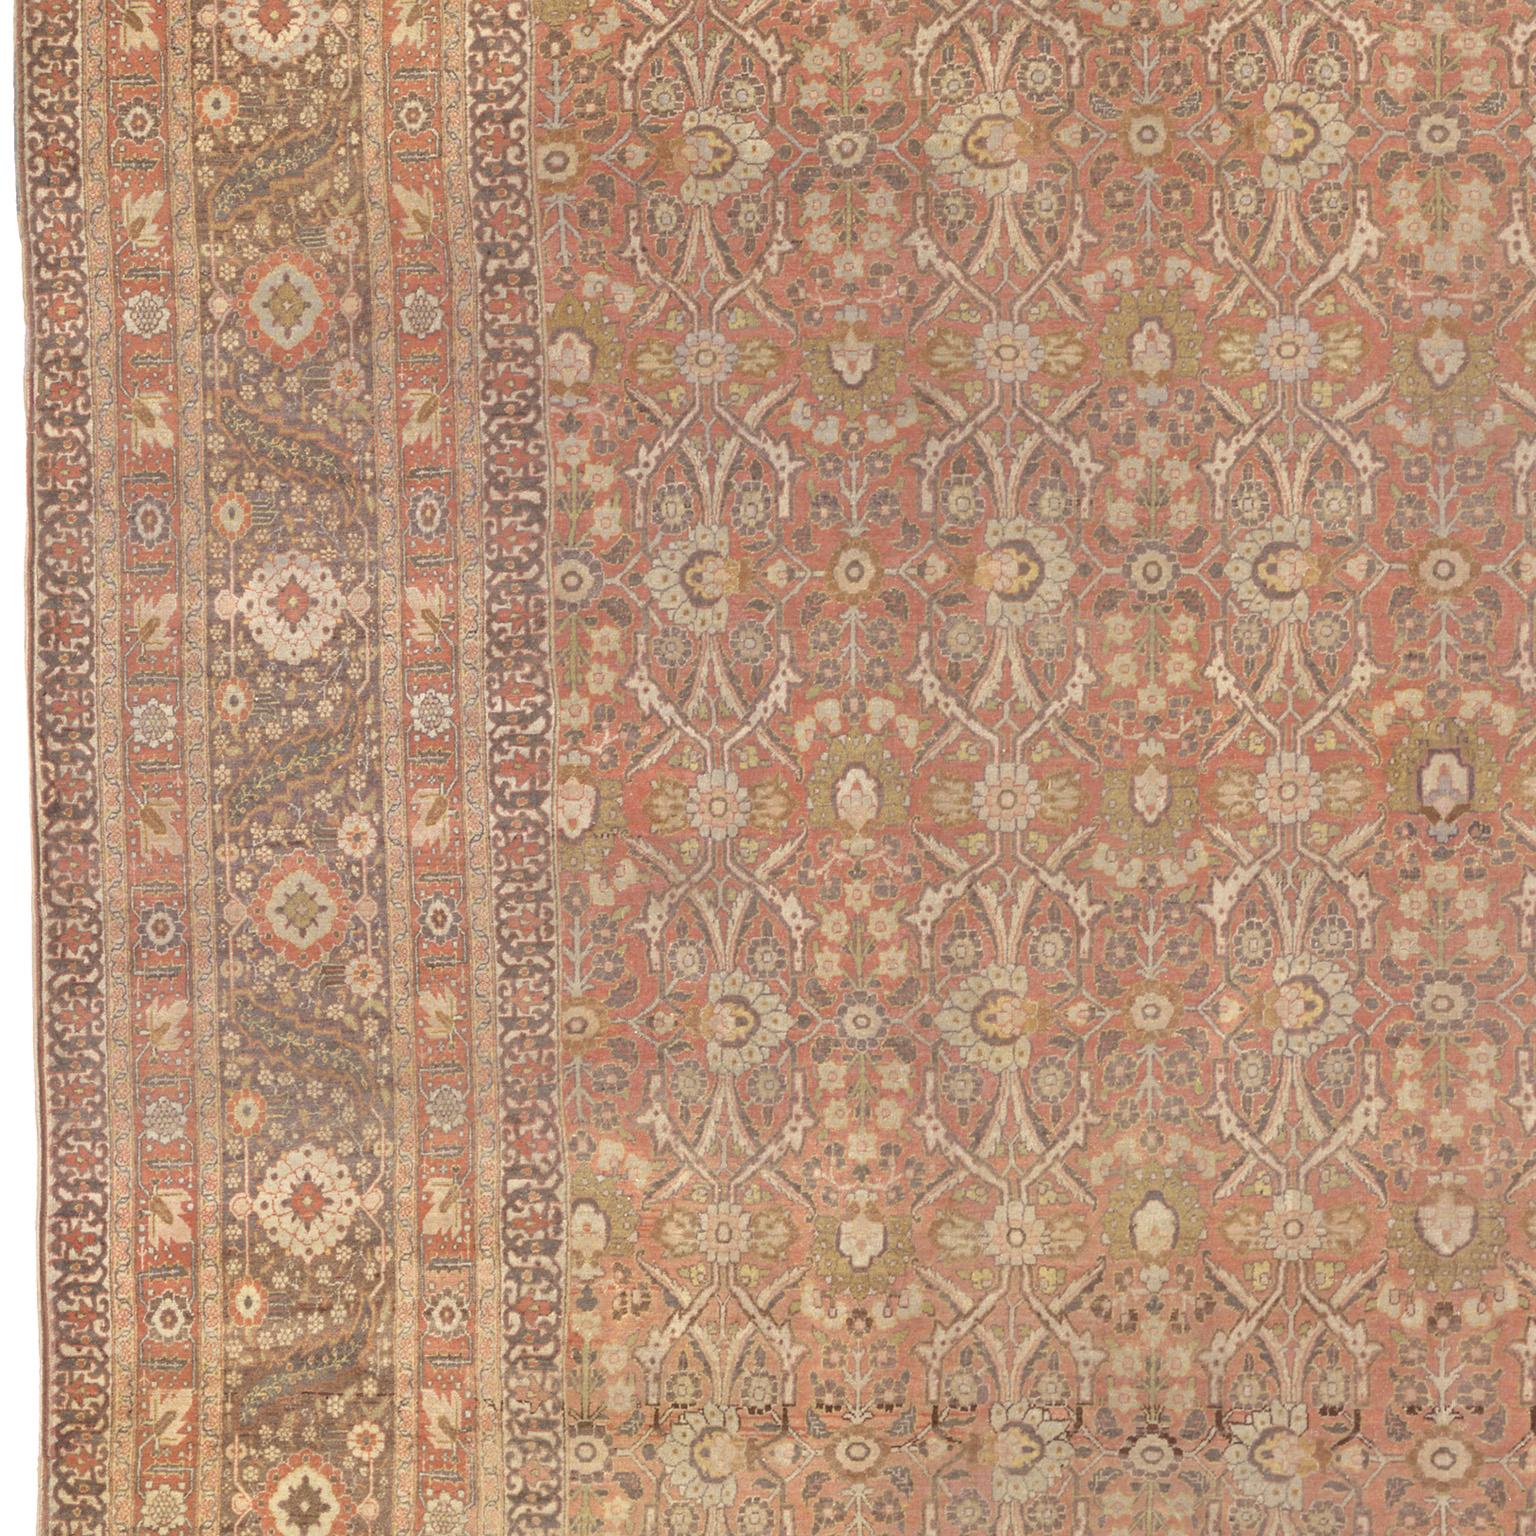 Wool Early 20th Century Persian Tabriz Rug